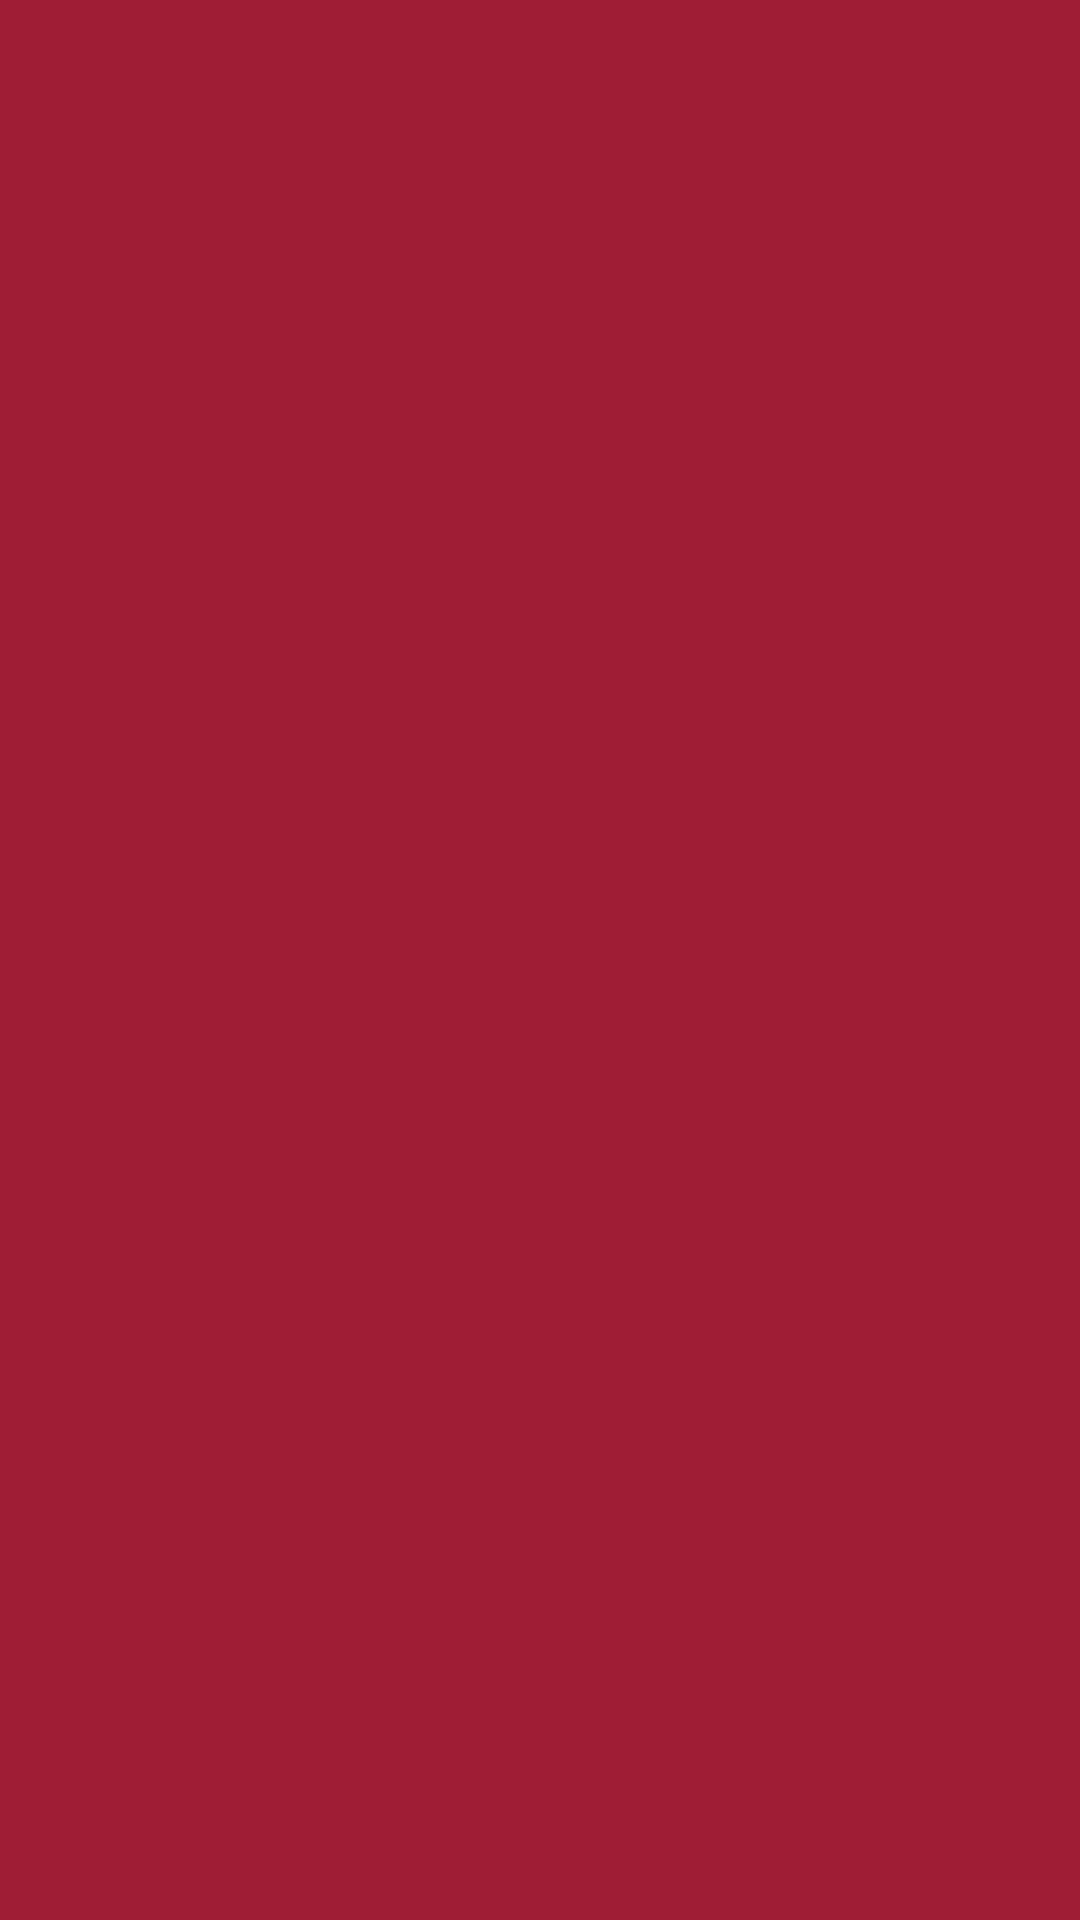 1080x1920 Vivid Burgundy Solid Color Background